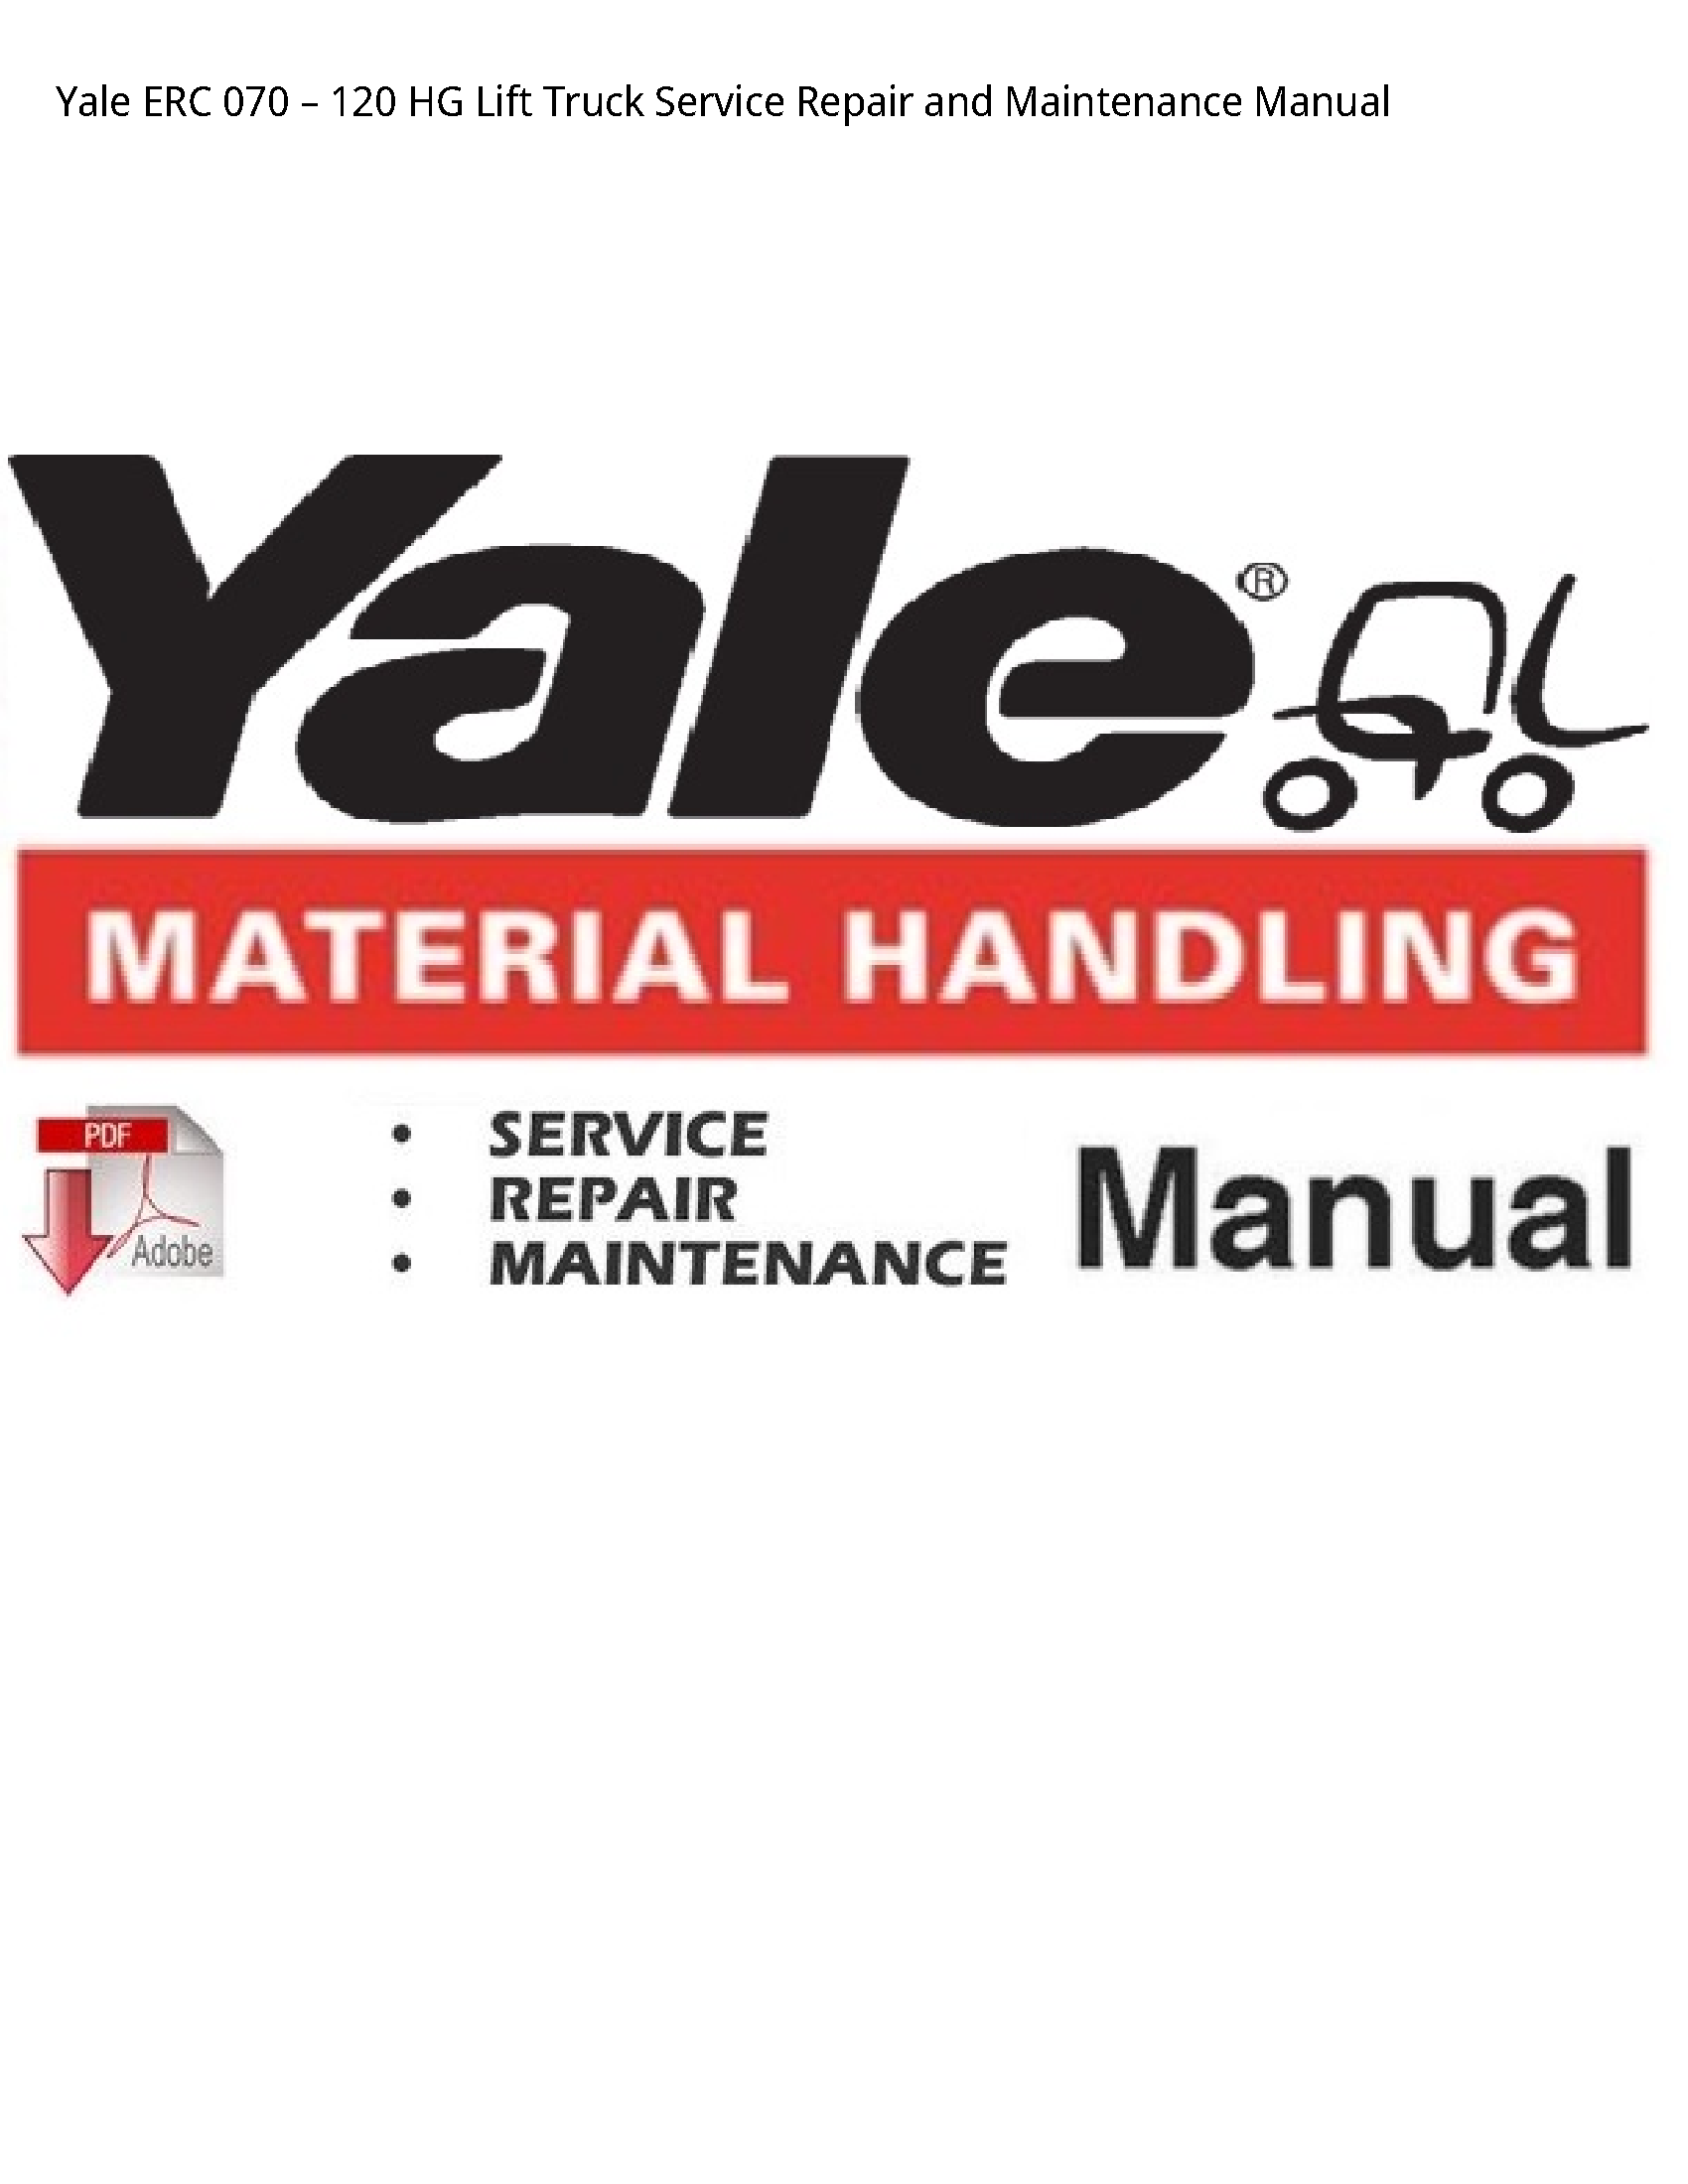 Yale 070 ERC HG Lift Truck manual